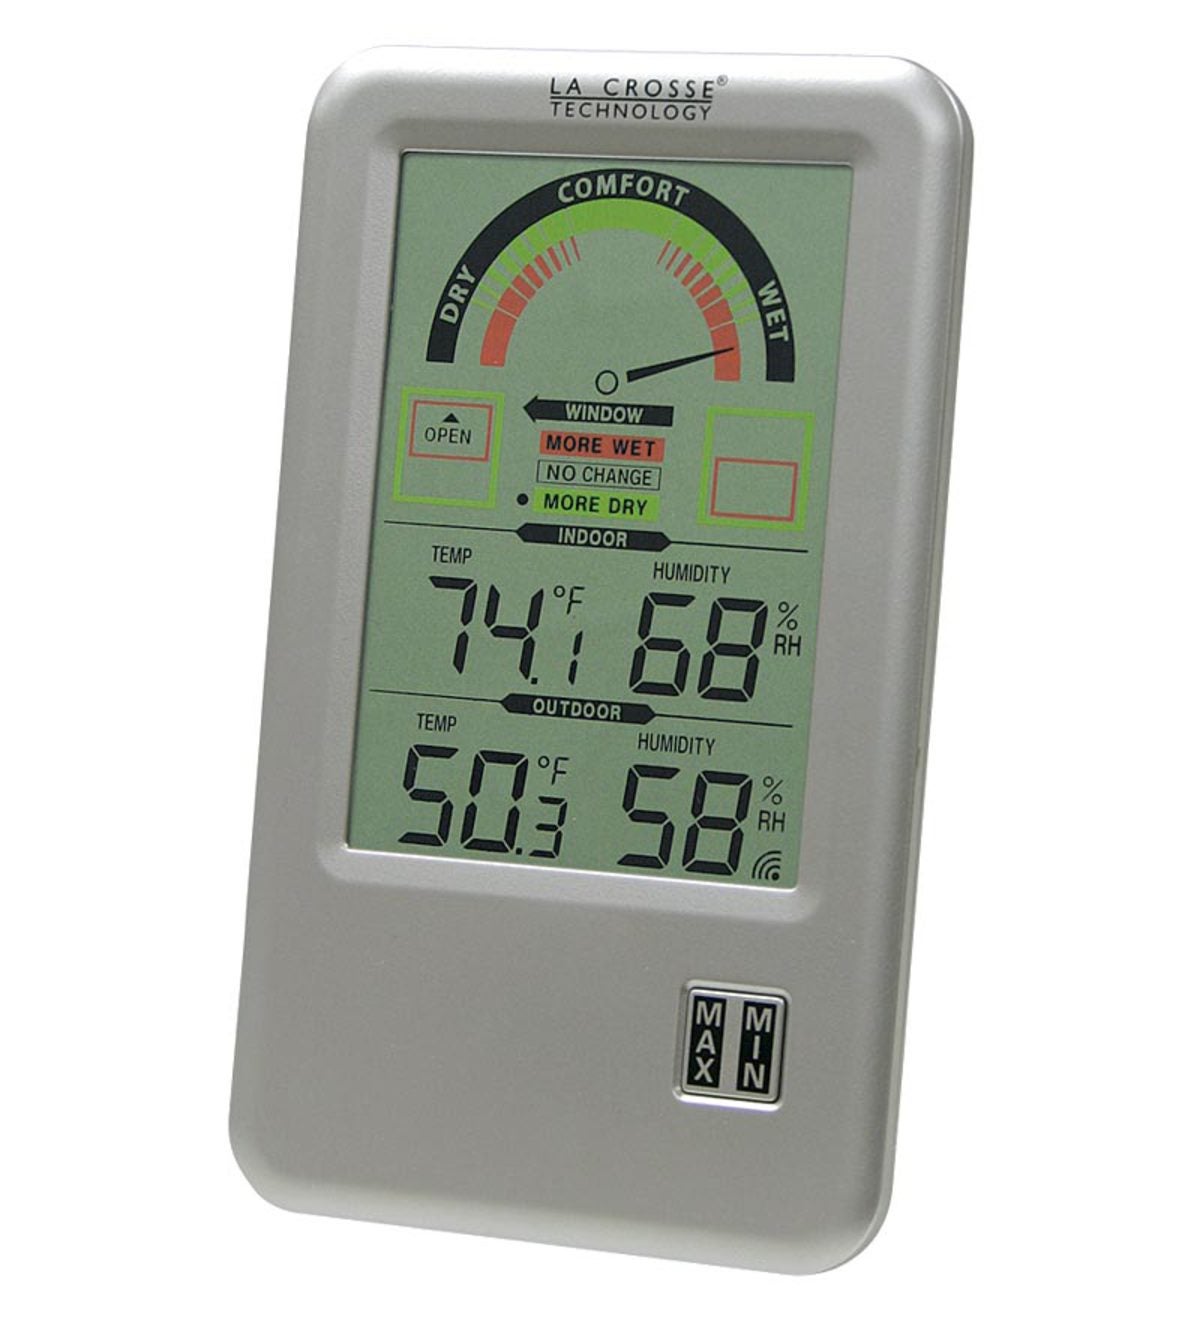 La Crosse Technology™ Wireless Thermometer/Comfort Meter